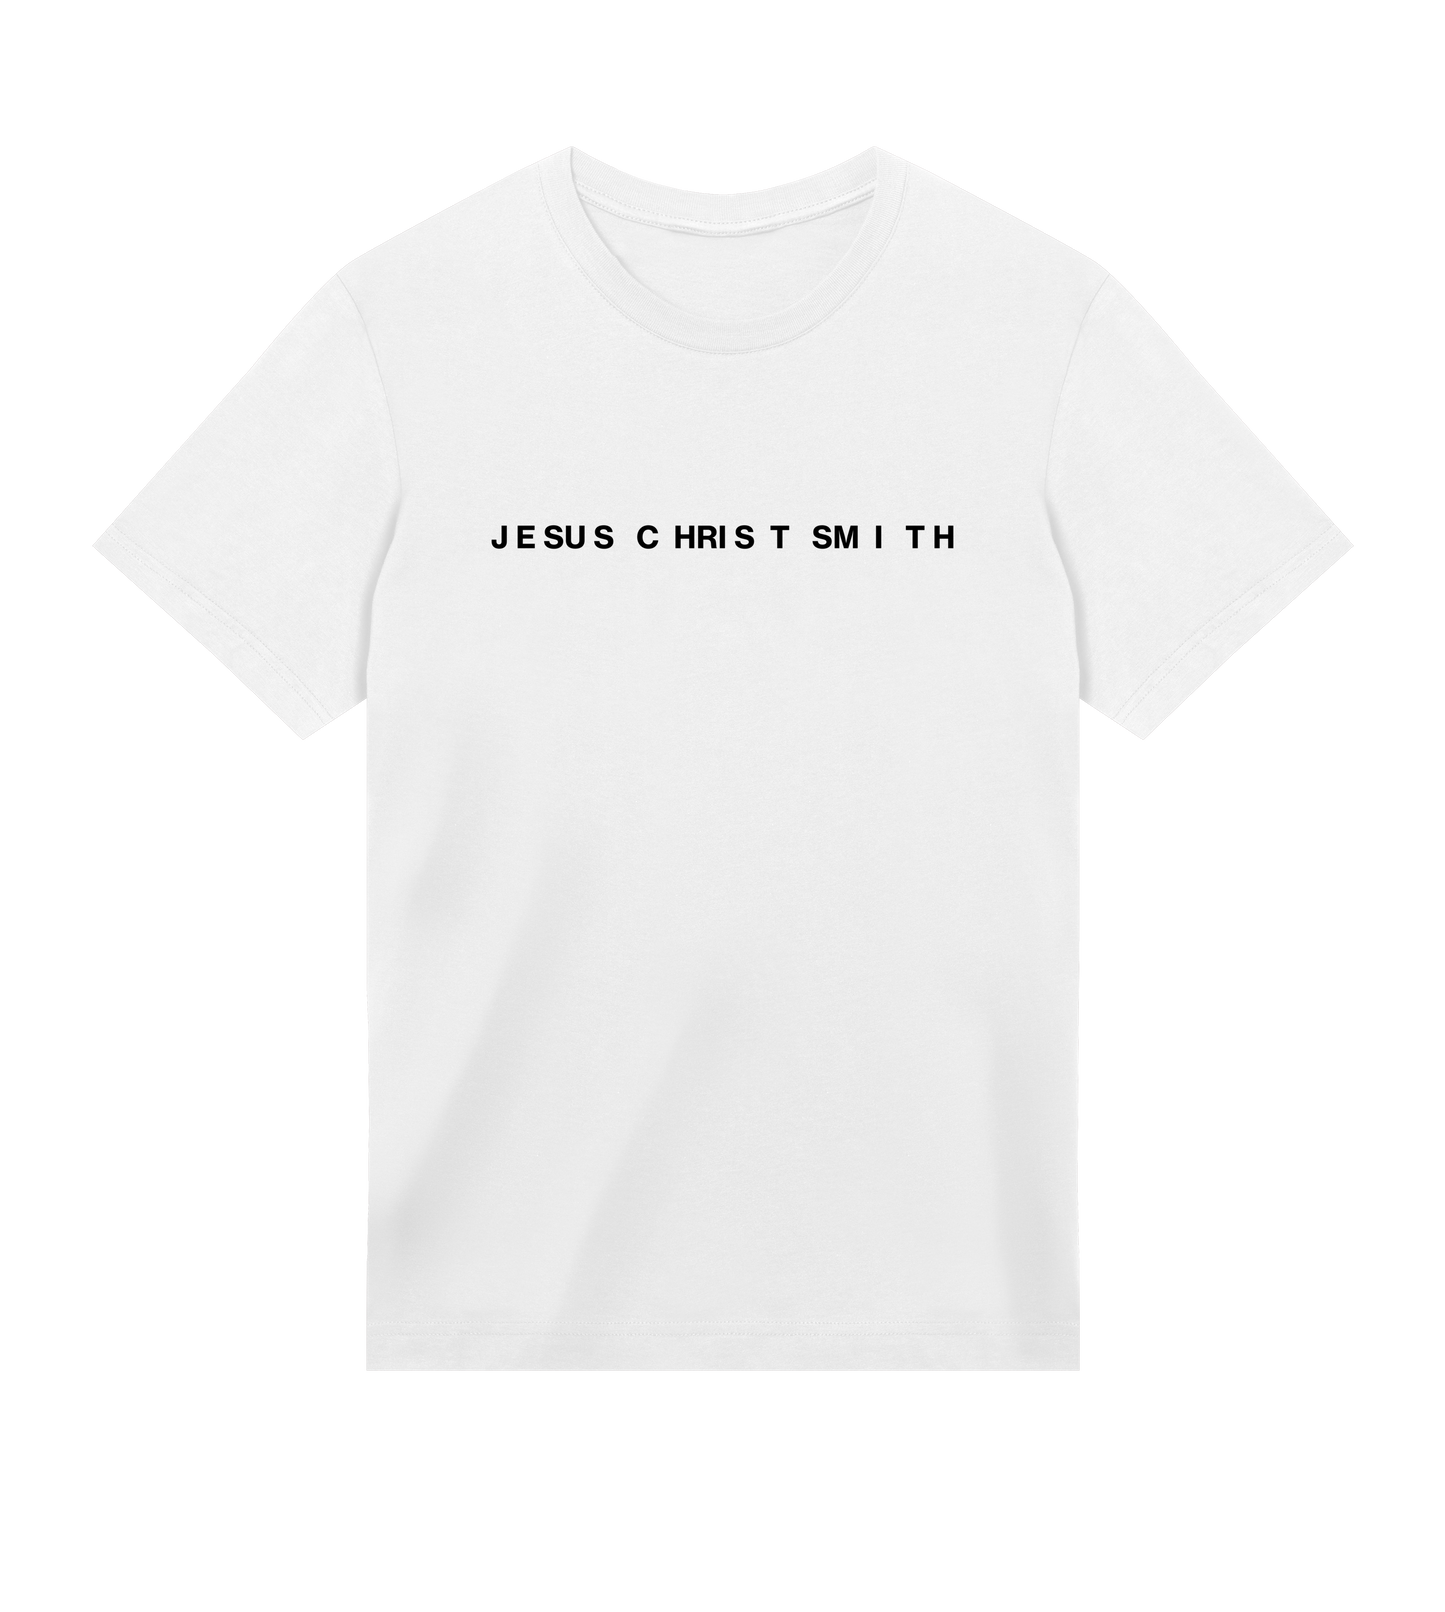 Jesus Christ Smith Short-Sleeve T-Shirt